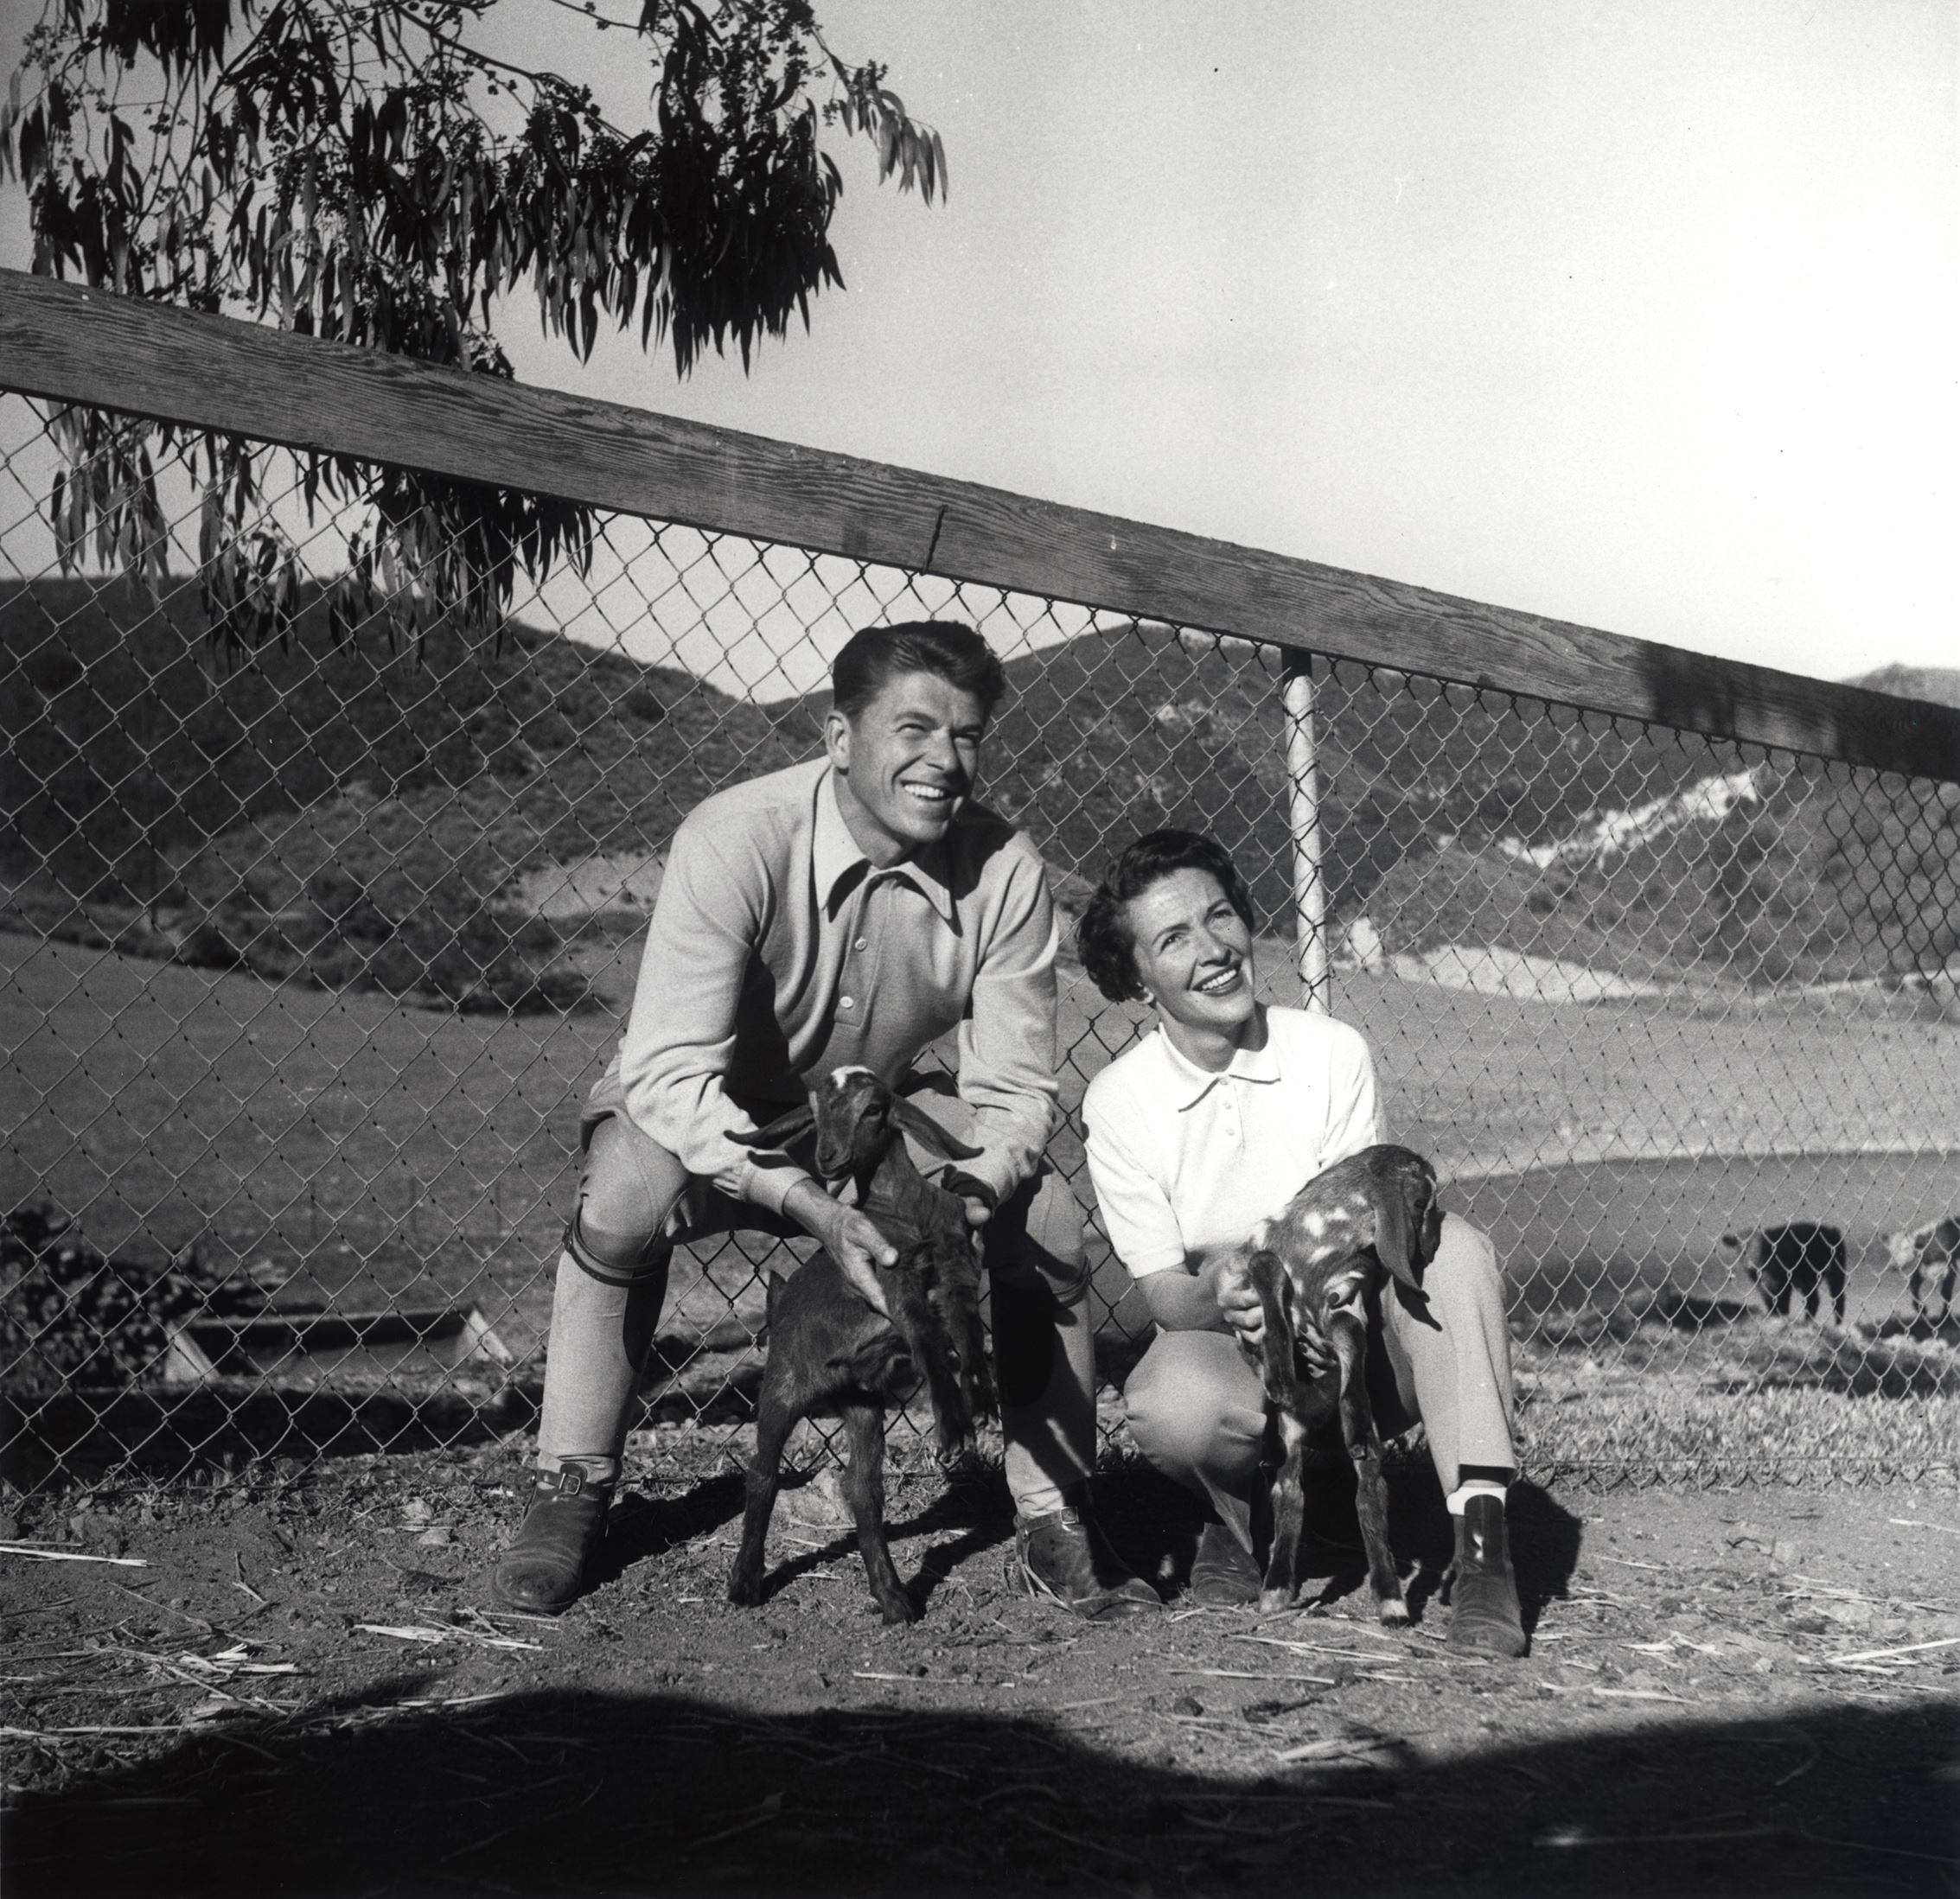 Ronald Reagan and Nancy Reagan posing with their goats “Nubie” and “Heidi” at Malibu Canyon Ranch